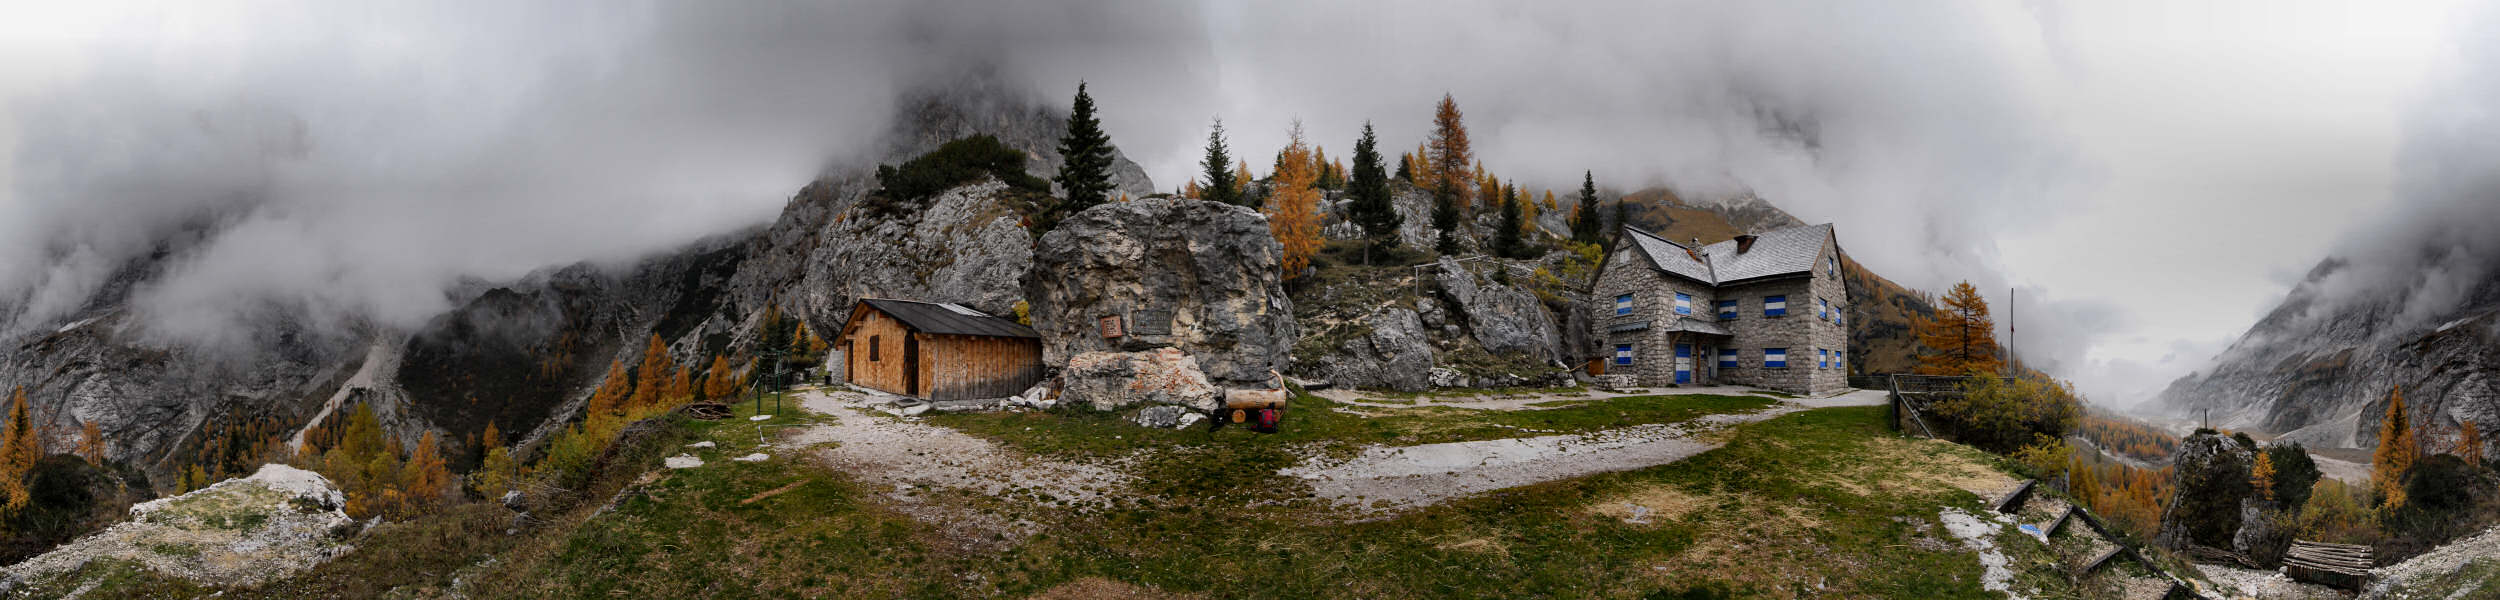 Dolomiti, Marmolada: rifugio O.Falier all'Ombretta